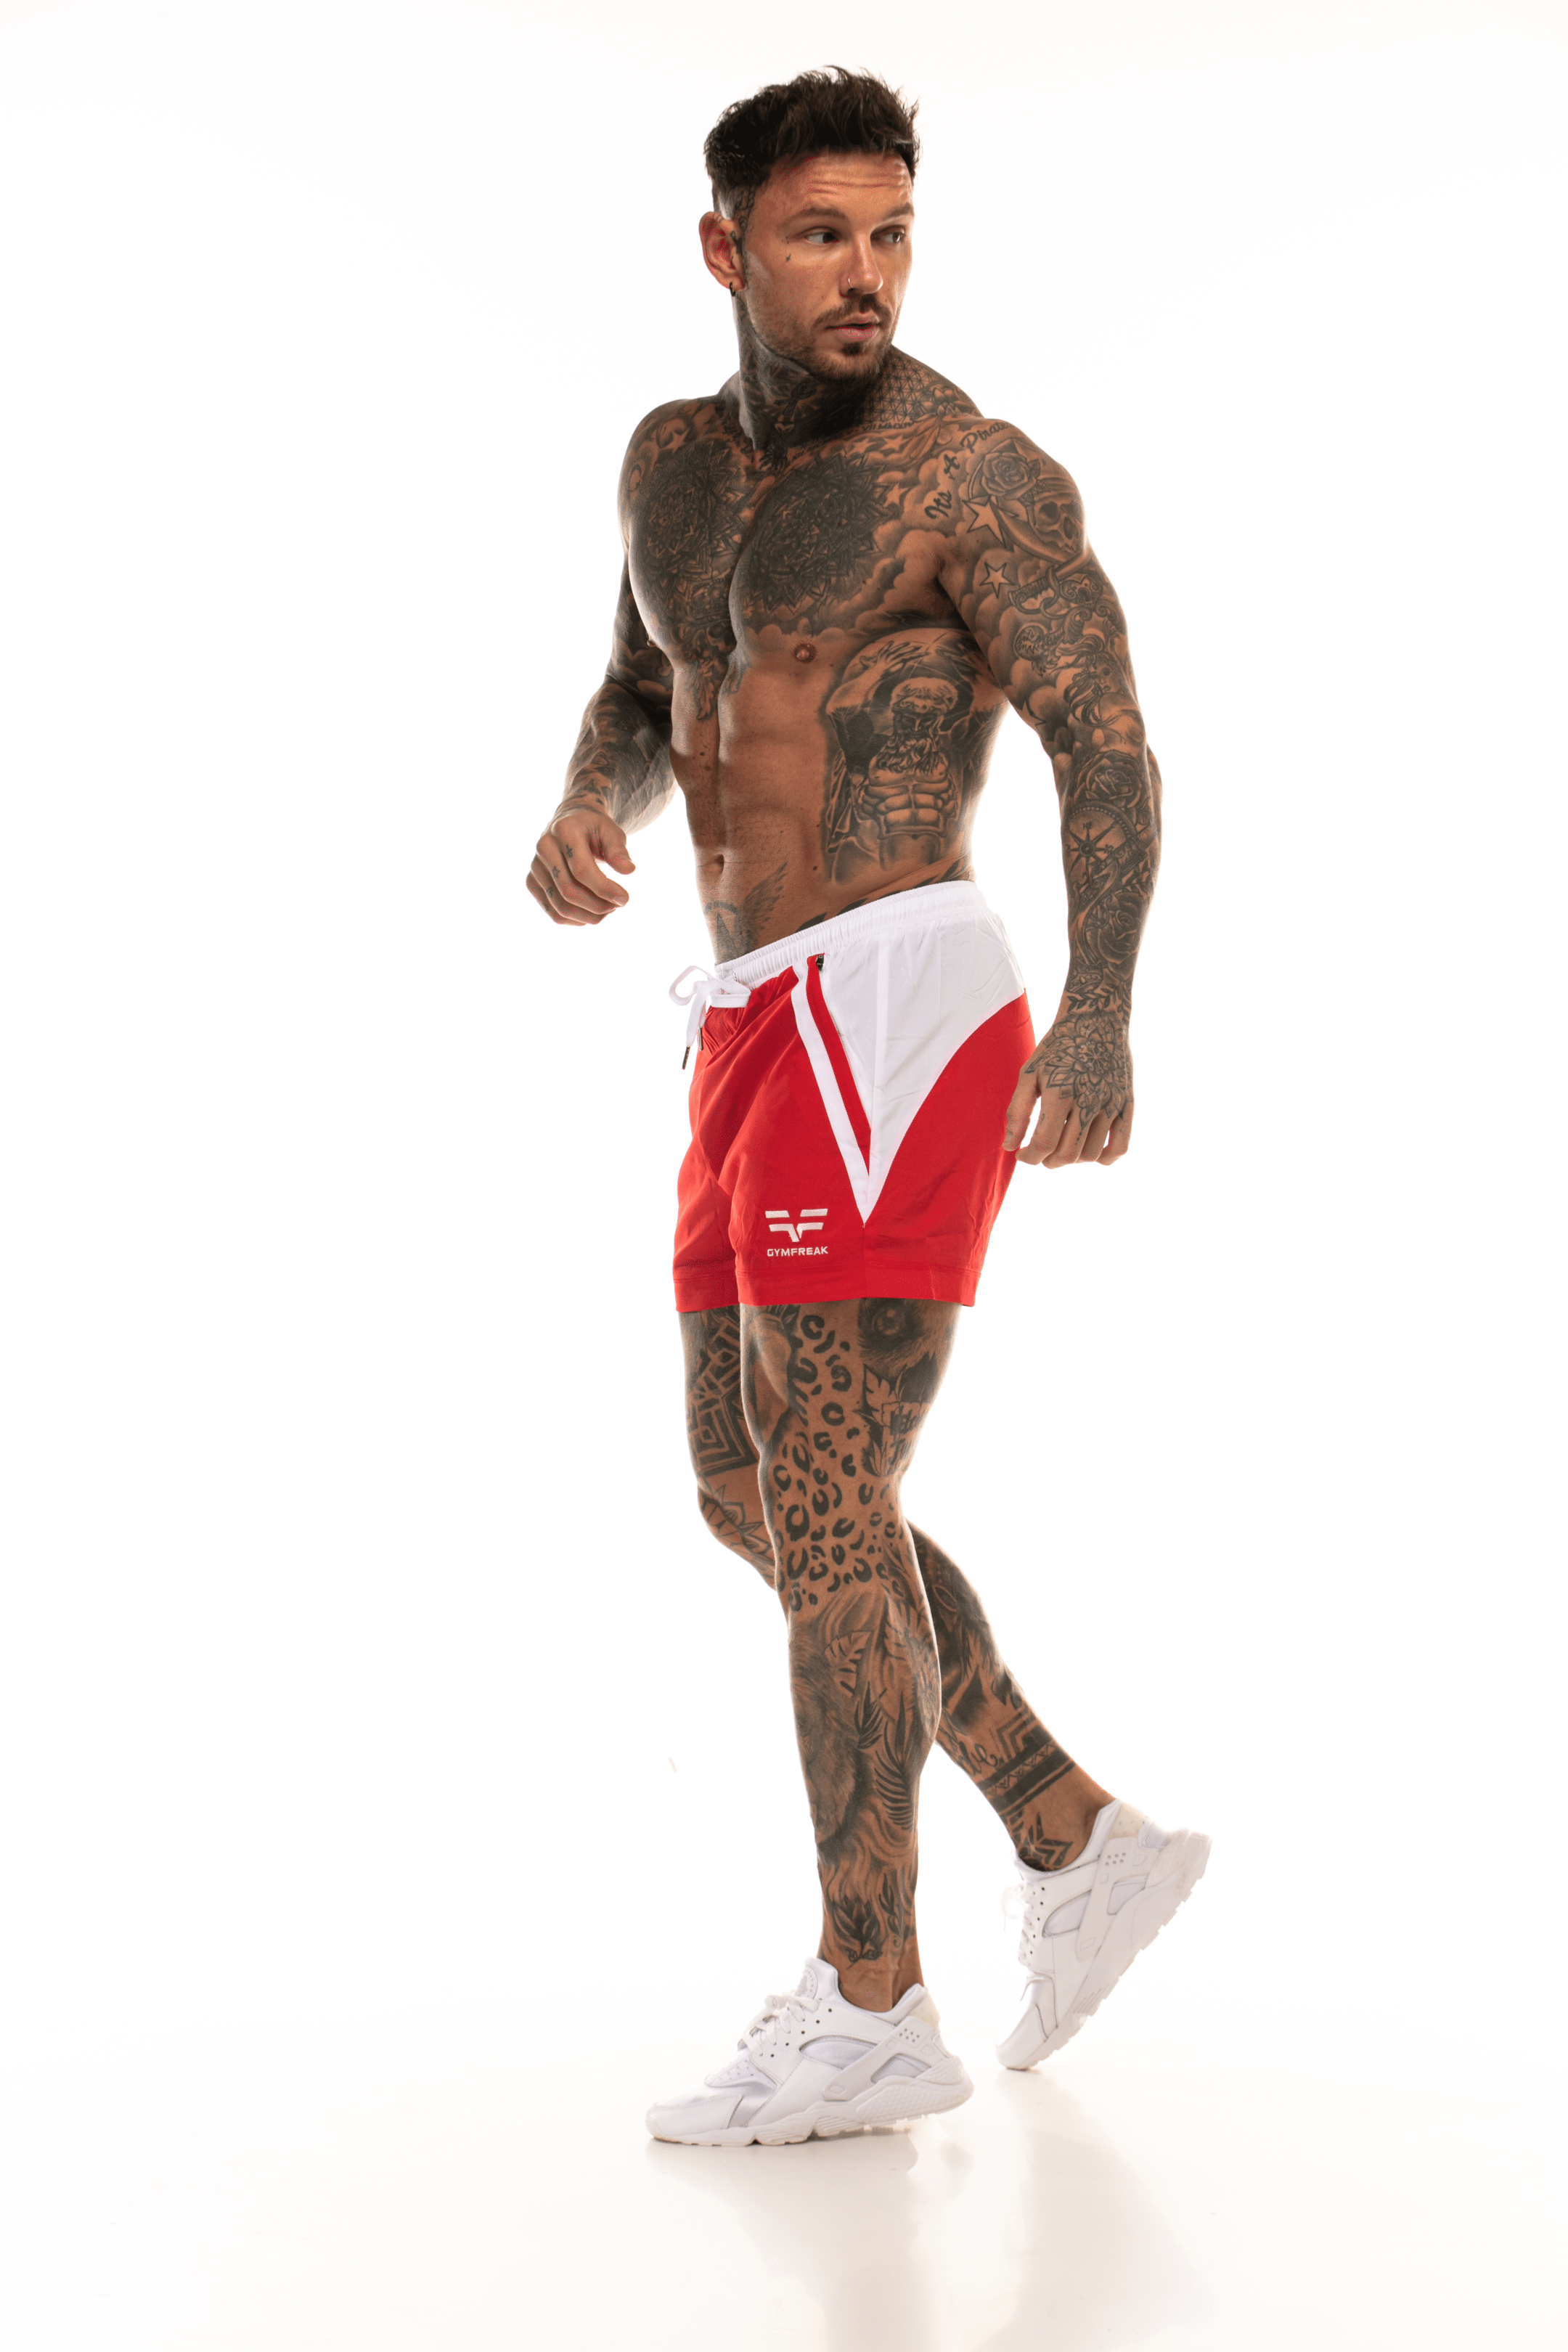 GymFreak Mens Pro Shorts - Red/white - 3.5 inch